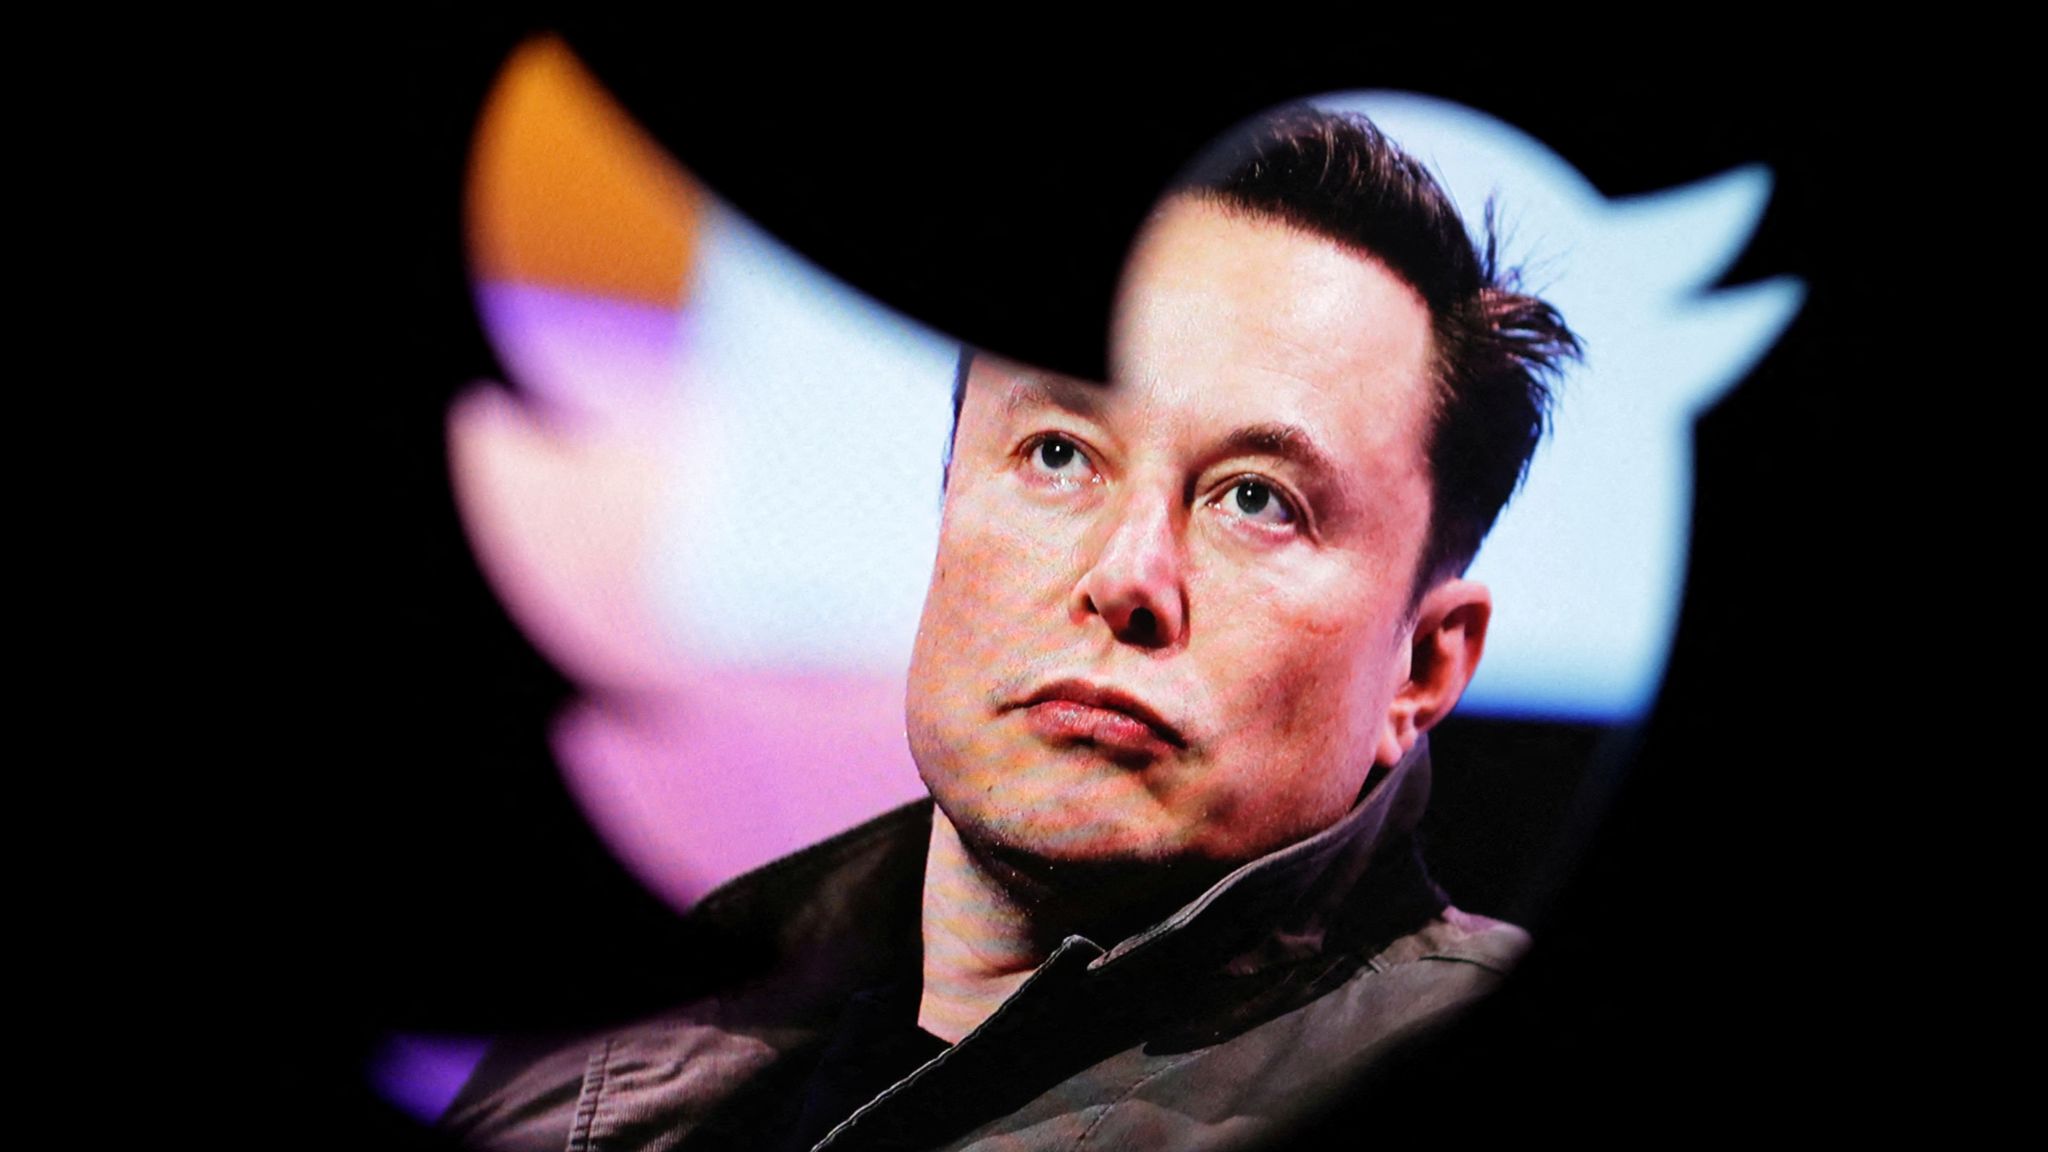 Entrepreneur of the Year, 2007: Elon Musk